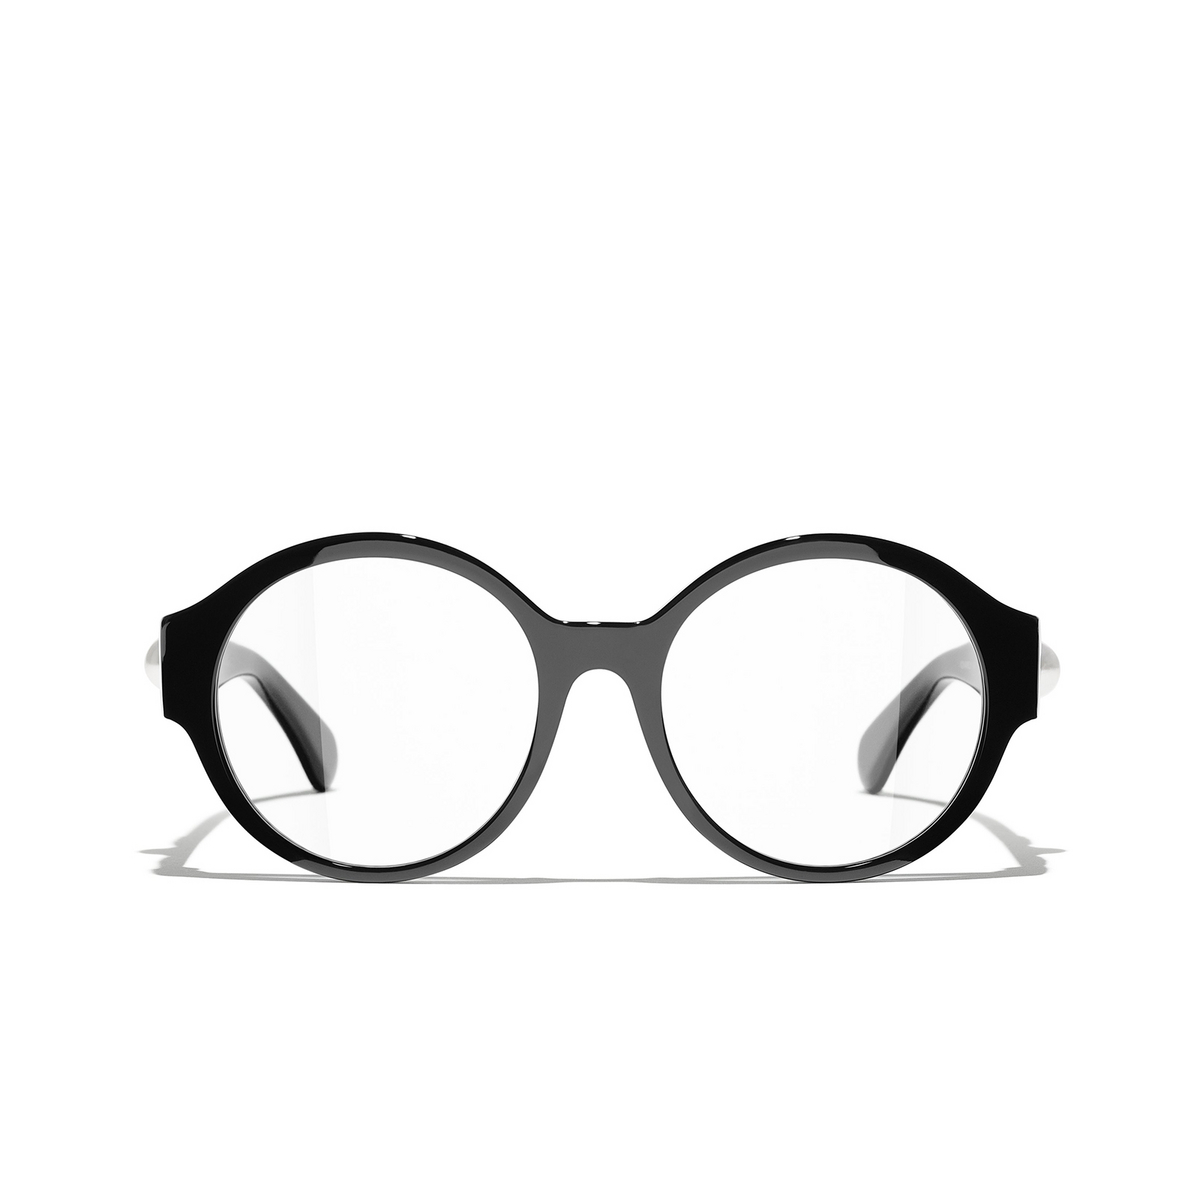 CHANEL round Eyeglasses C622 Black - front view